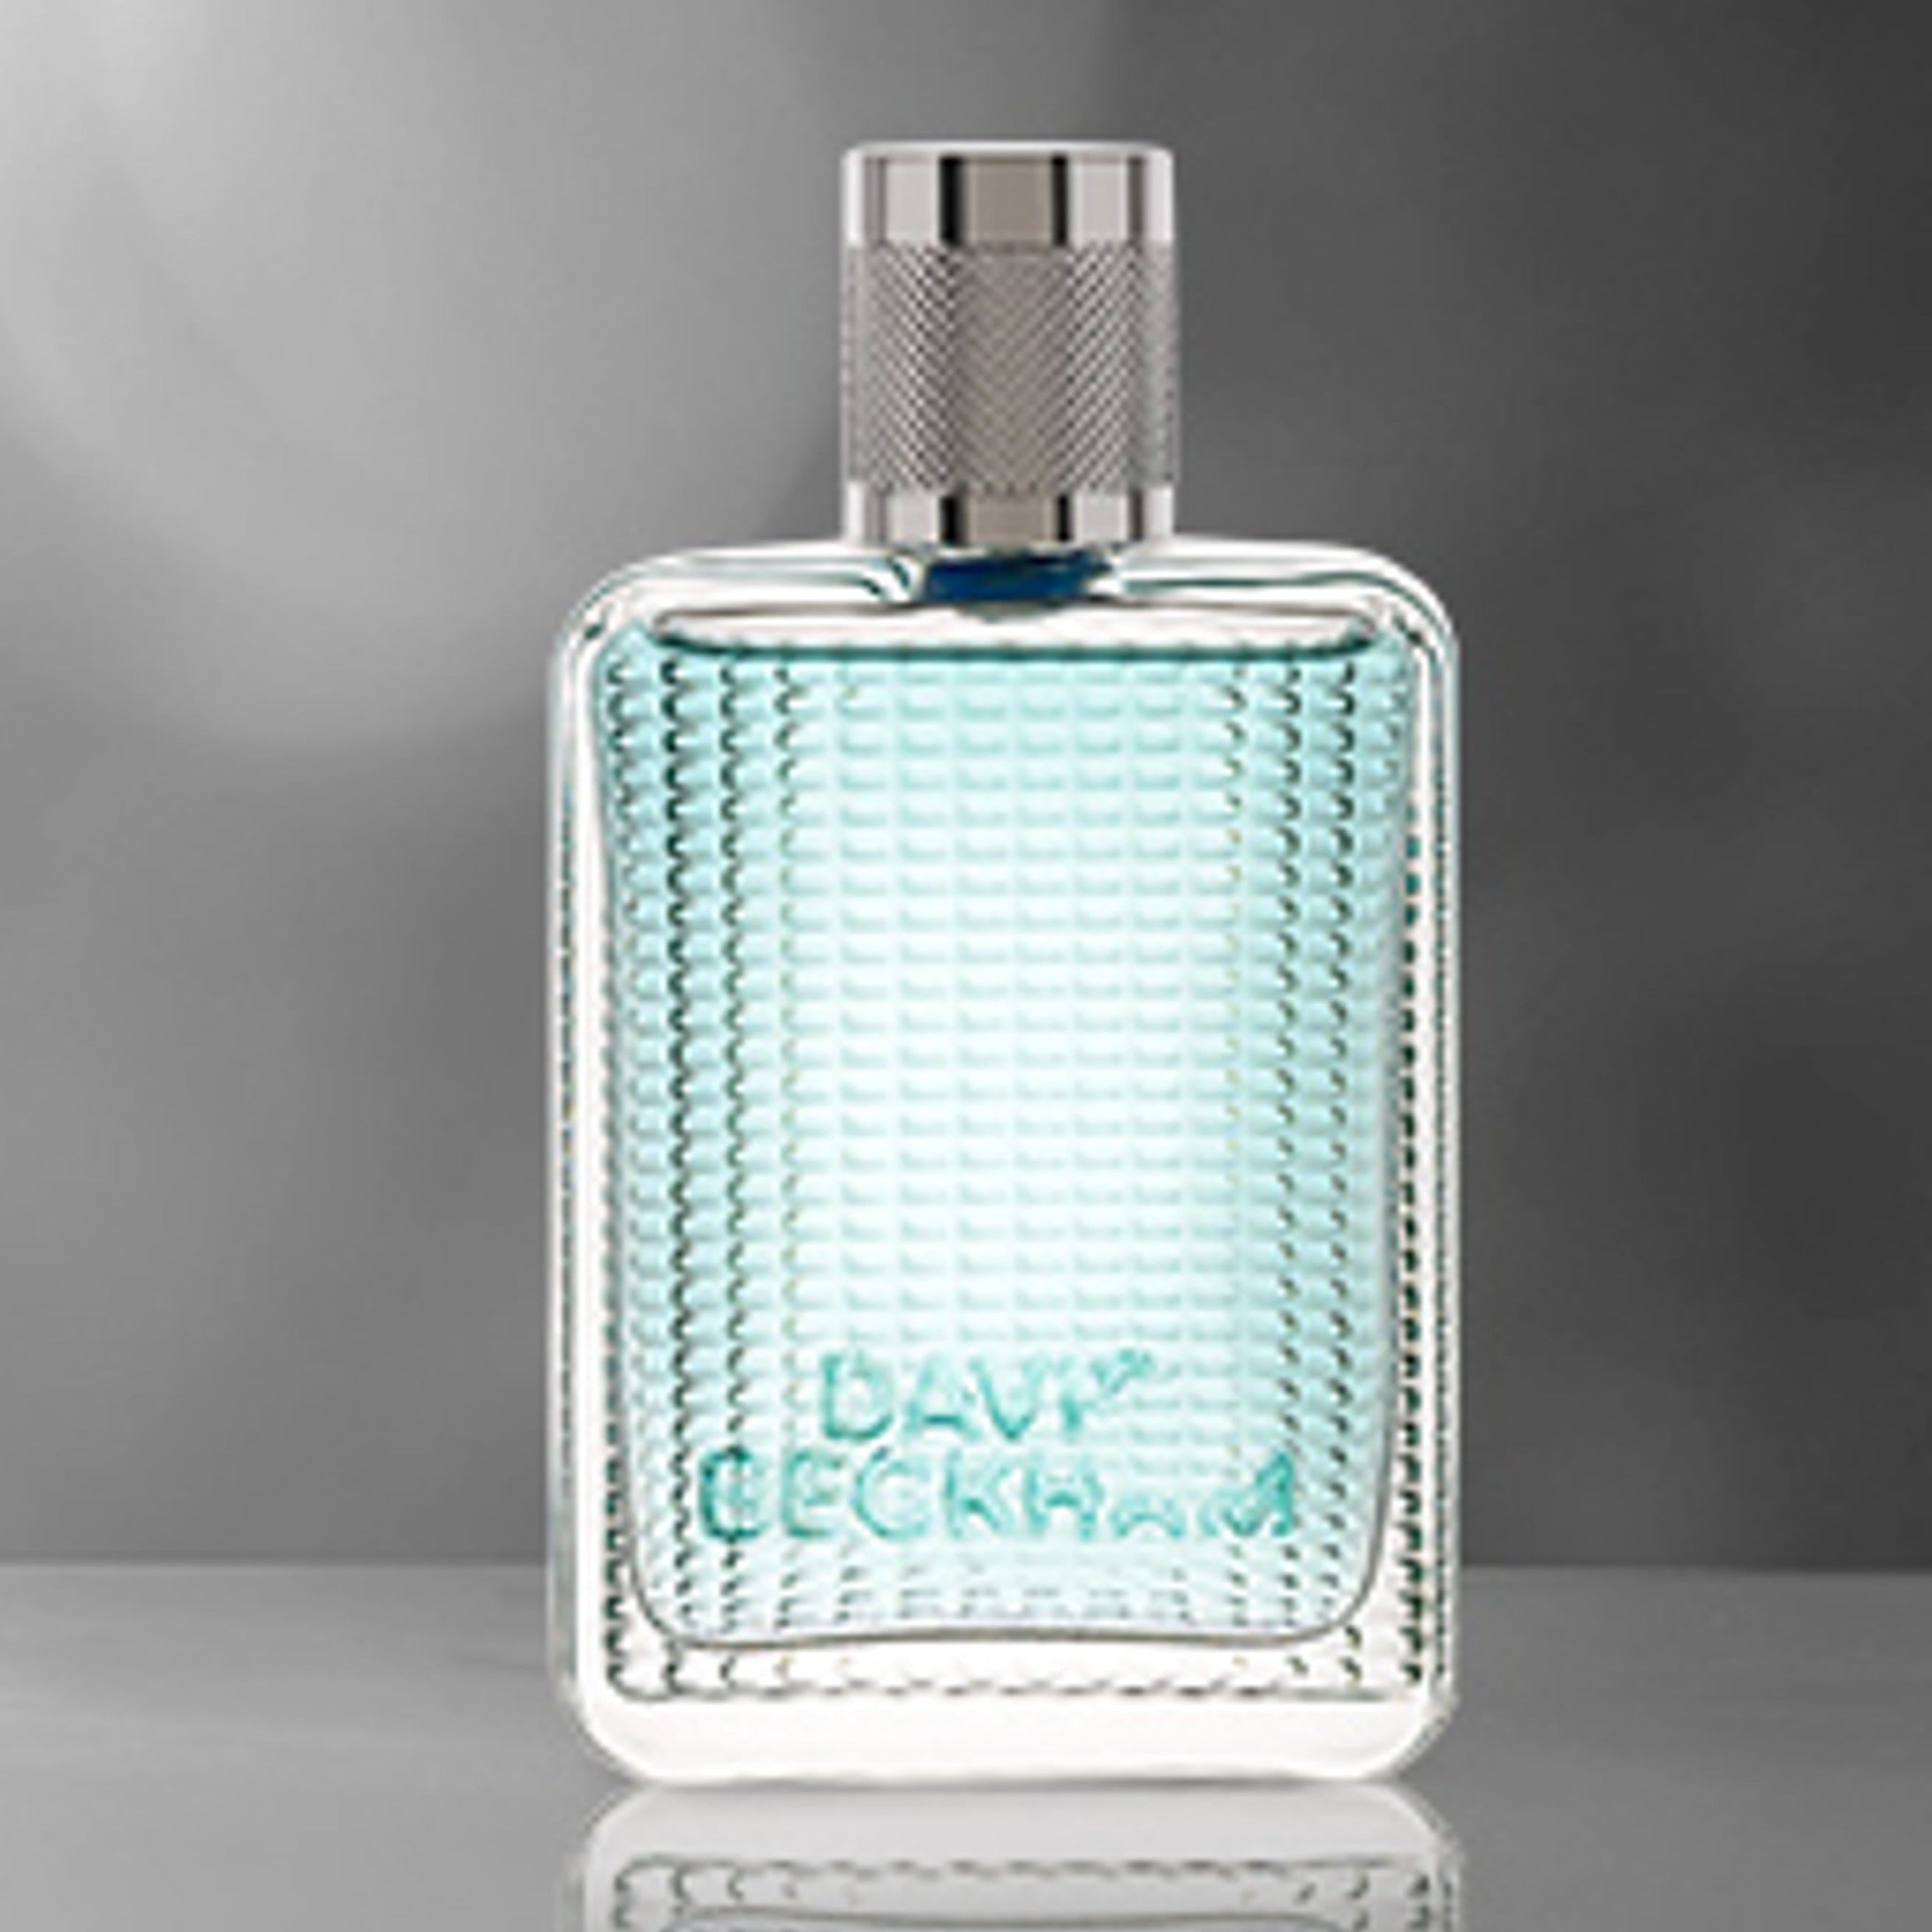 David Beckham The Essence EDT | My Perfume Shop Australia